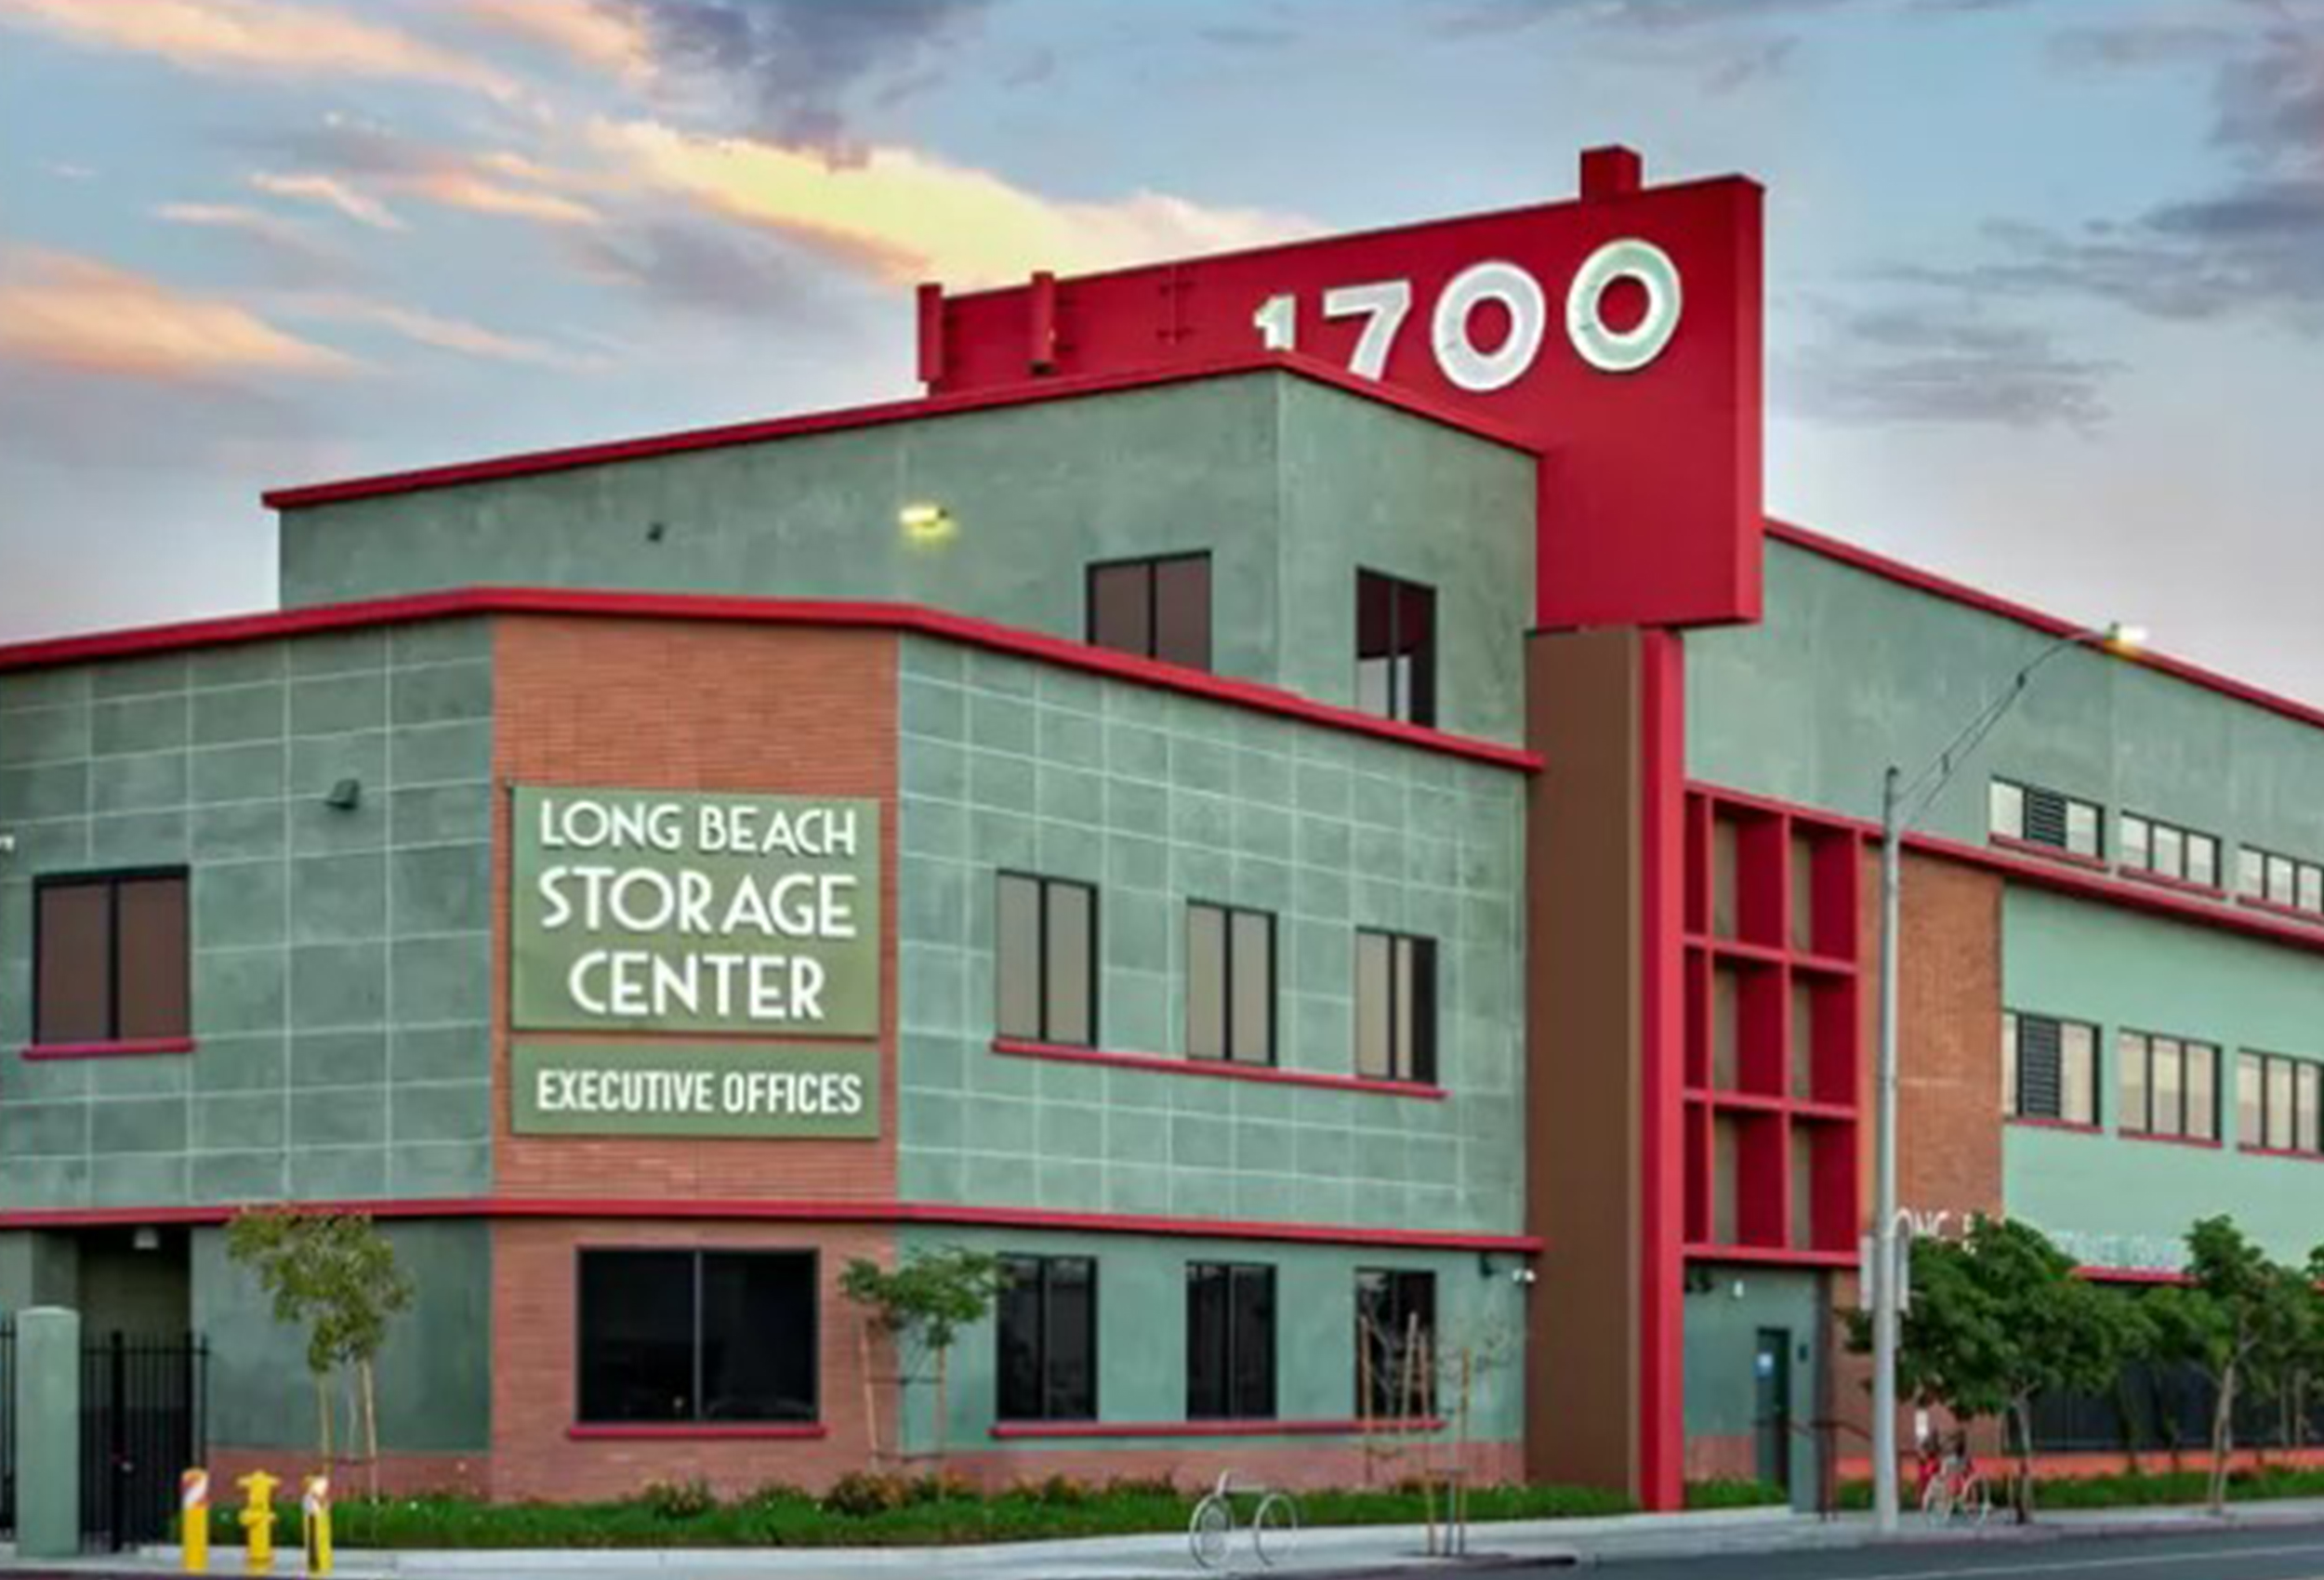 Long Beach Storage Center